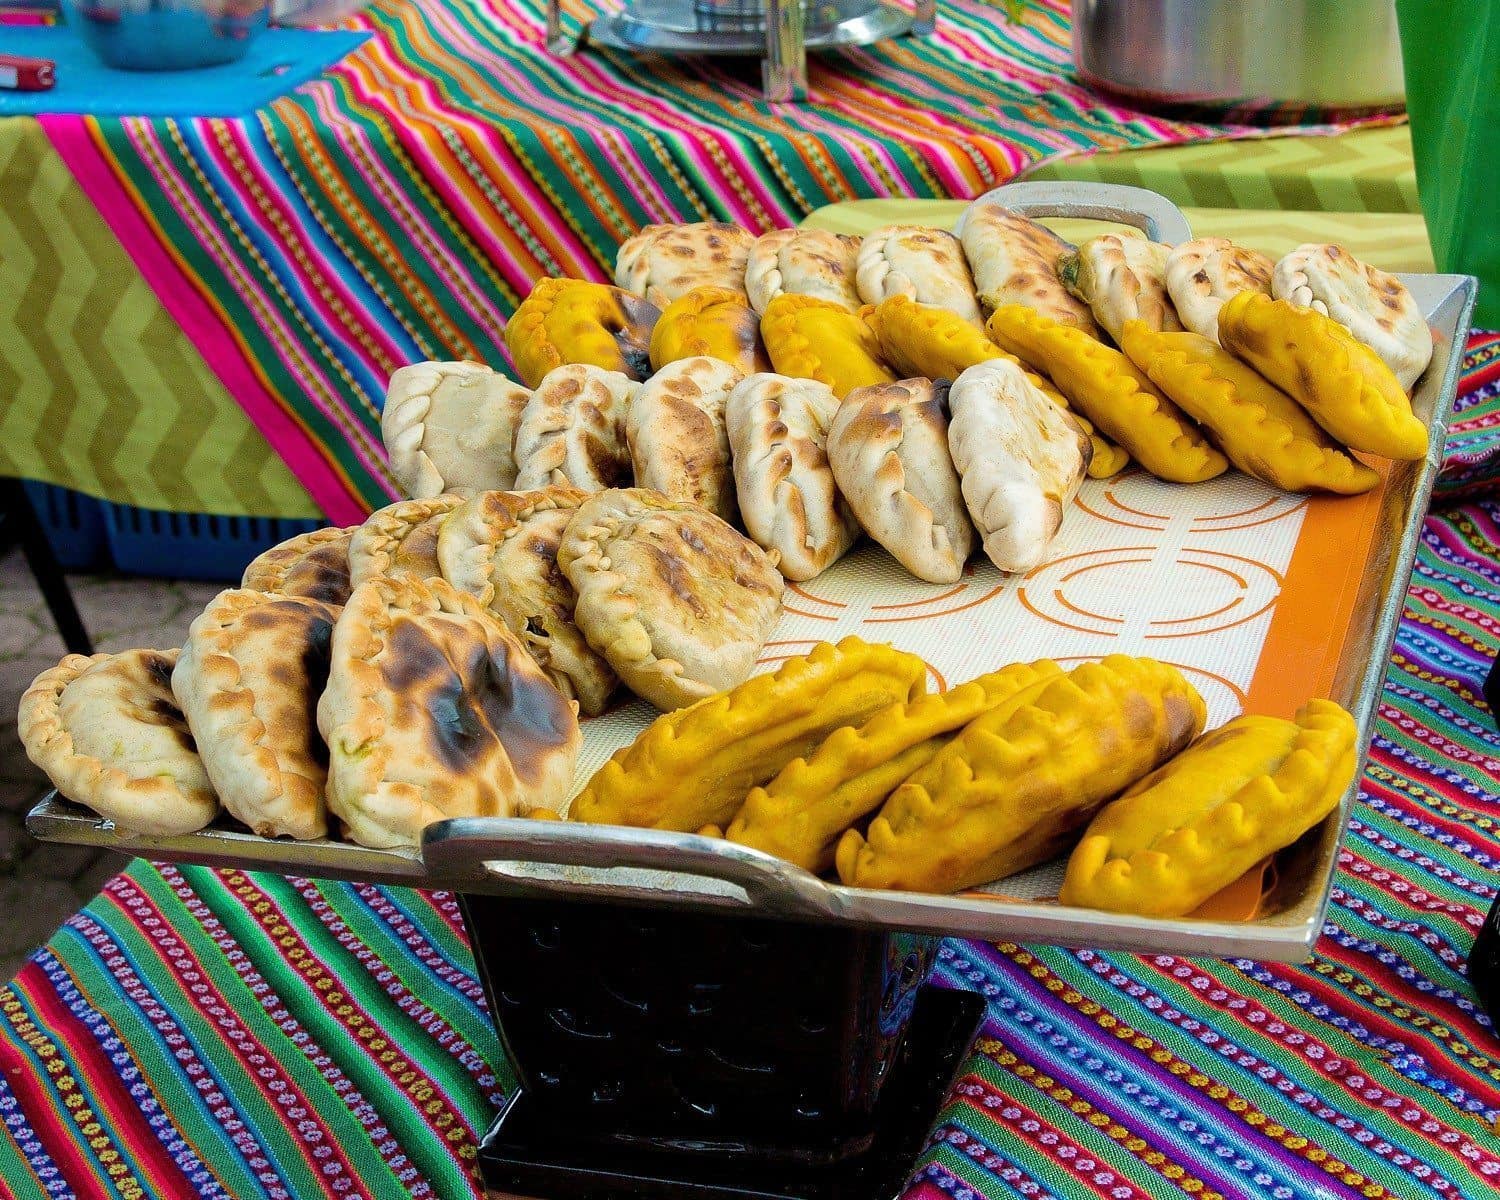 Vegan Argentinian Empanadas at Mercado Organico.